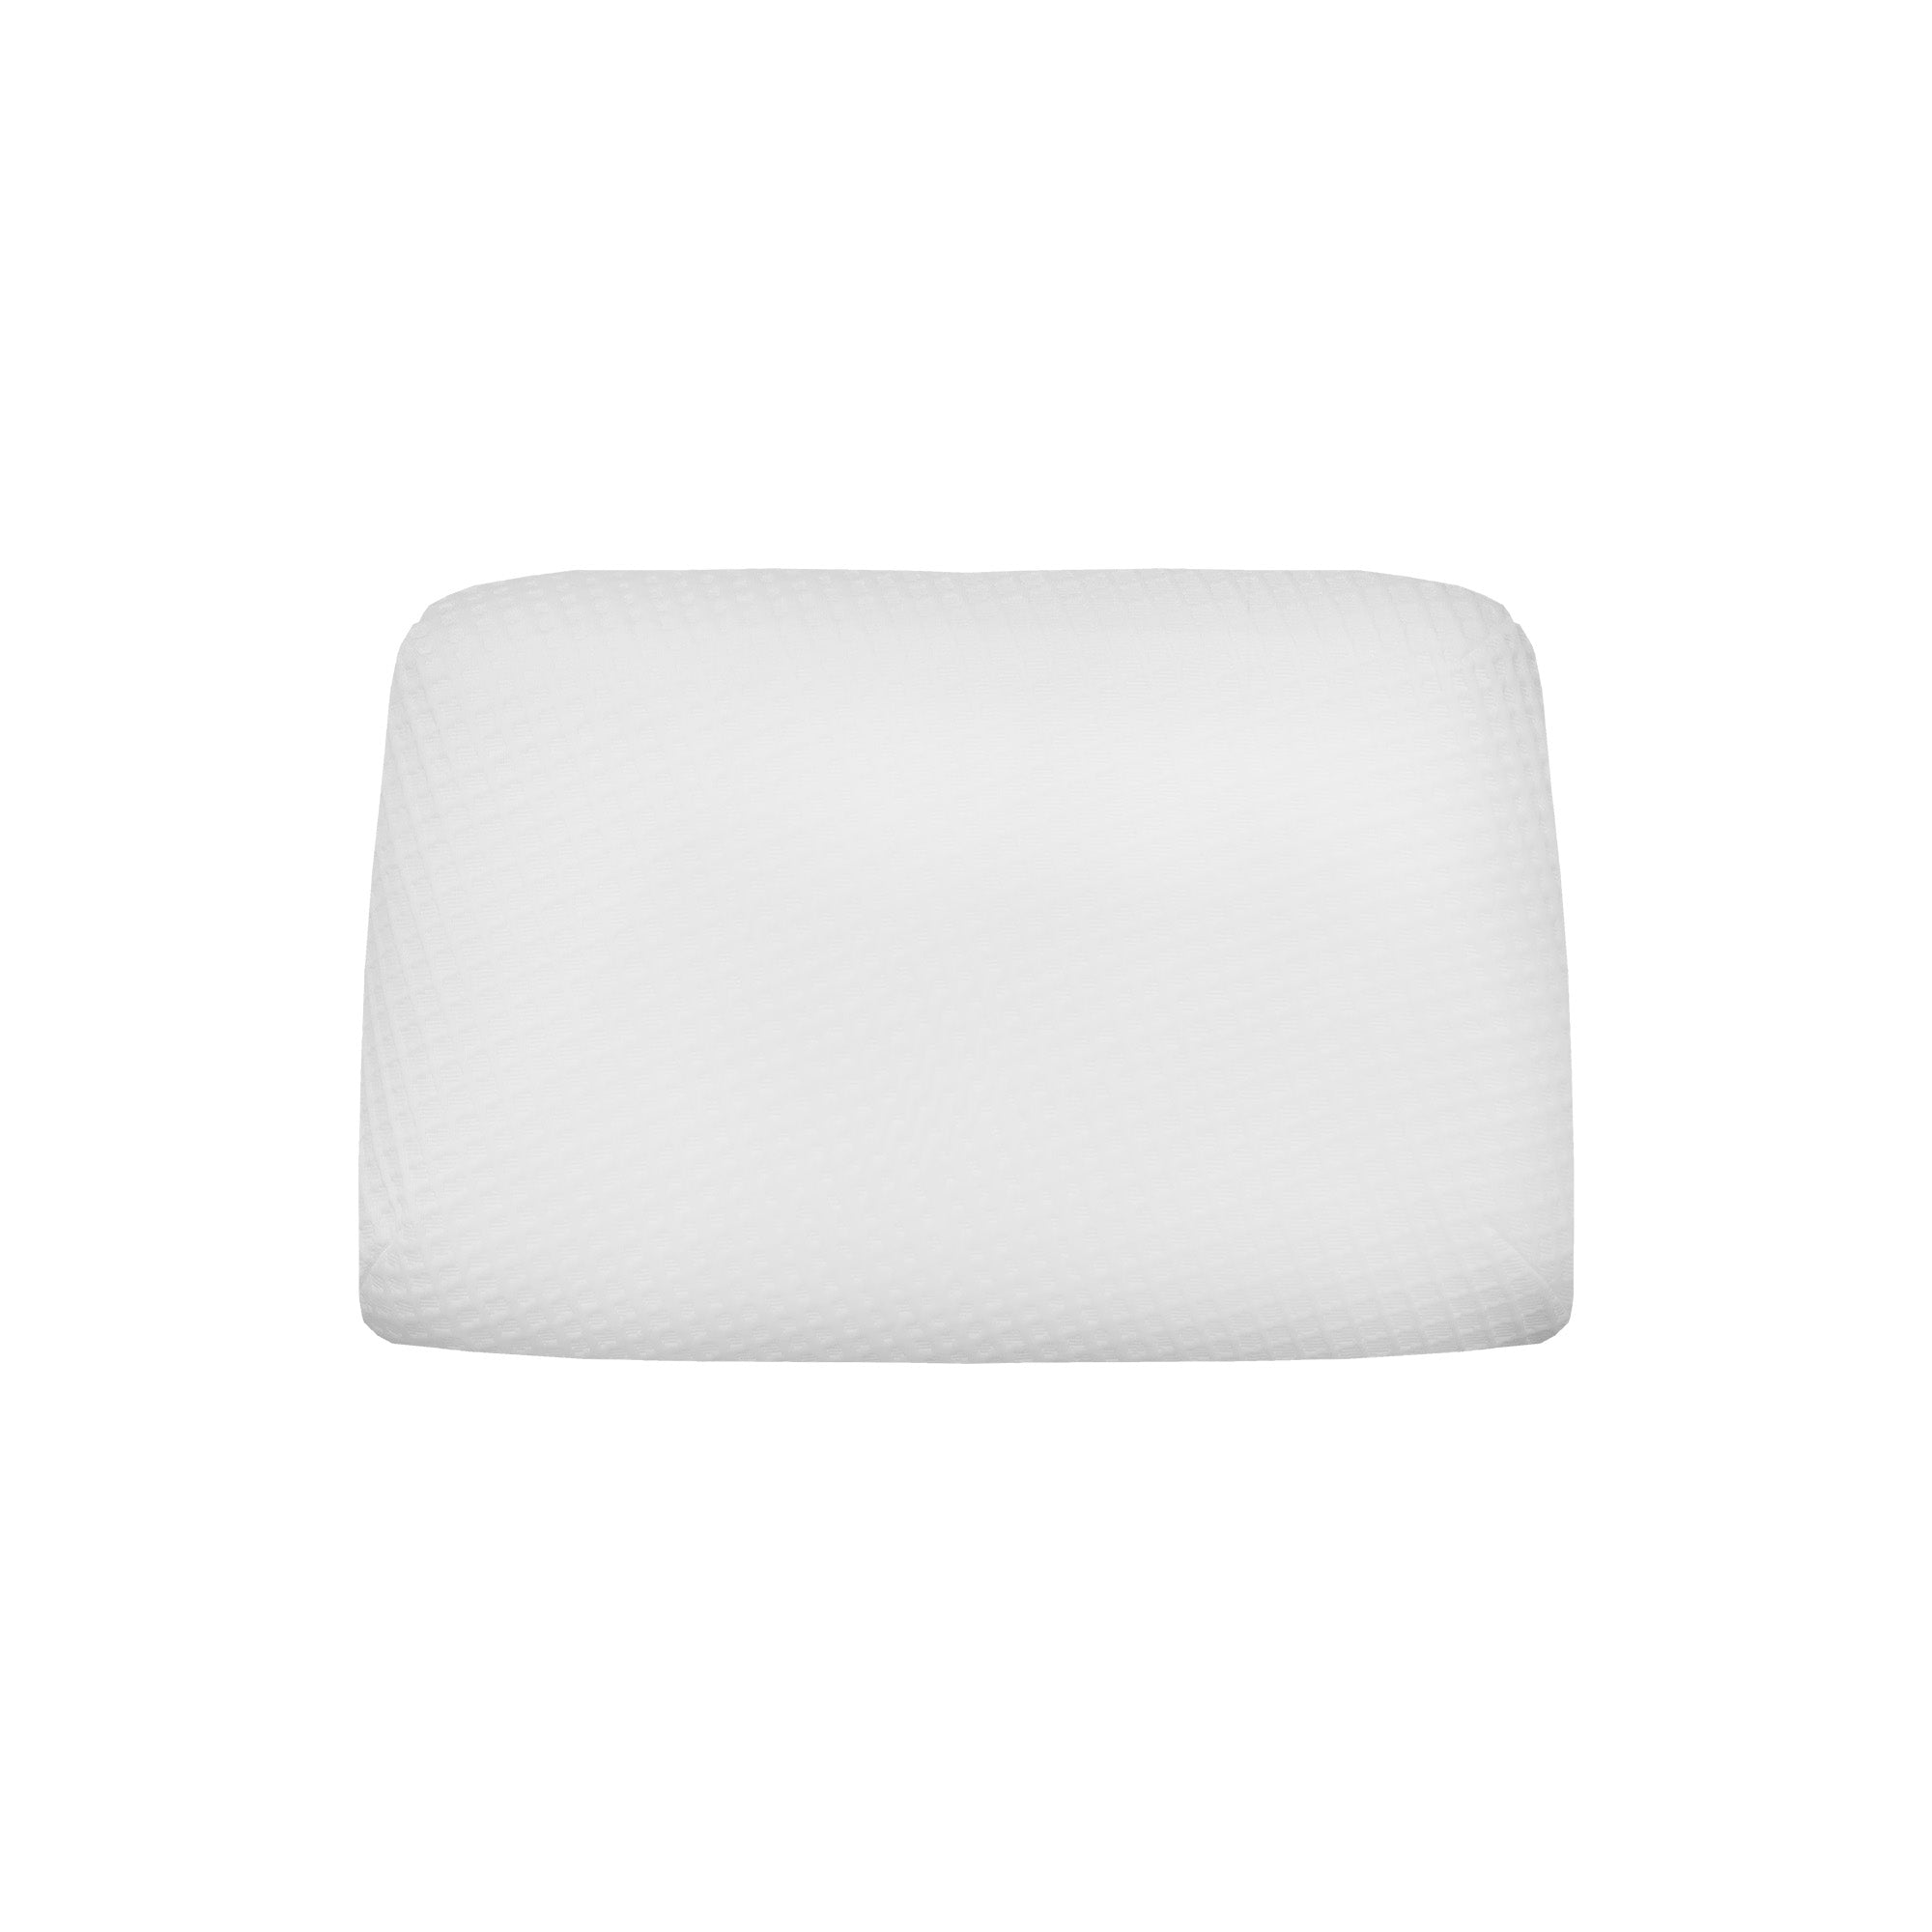 Sealy Classic Memory Foam Pillow